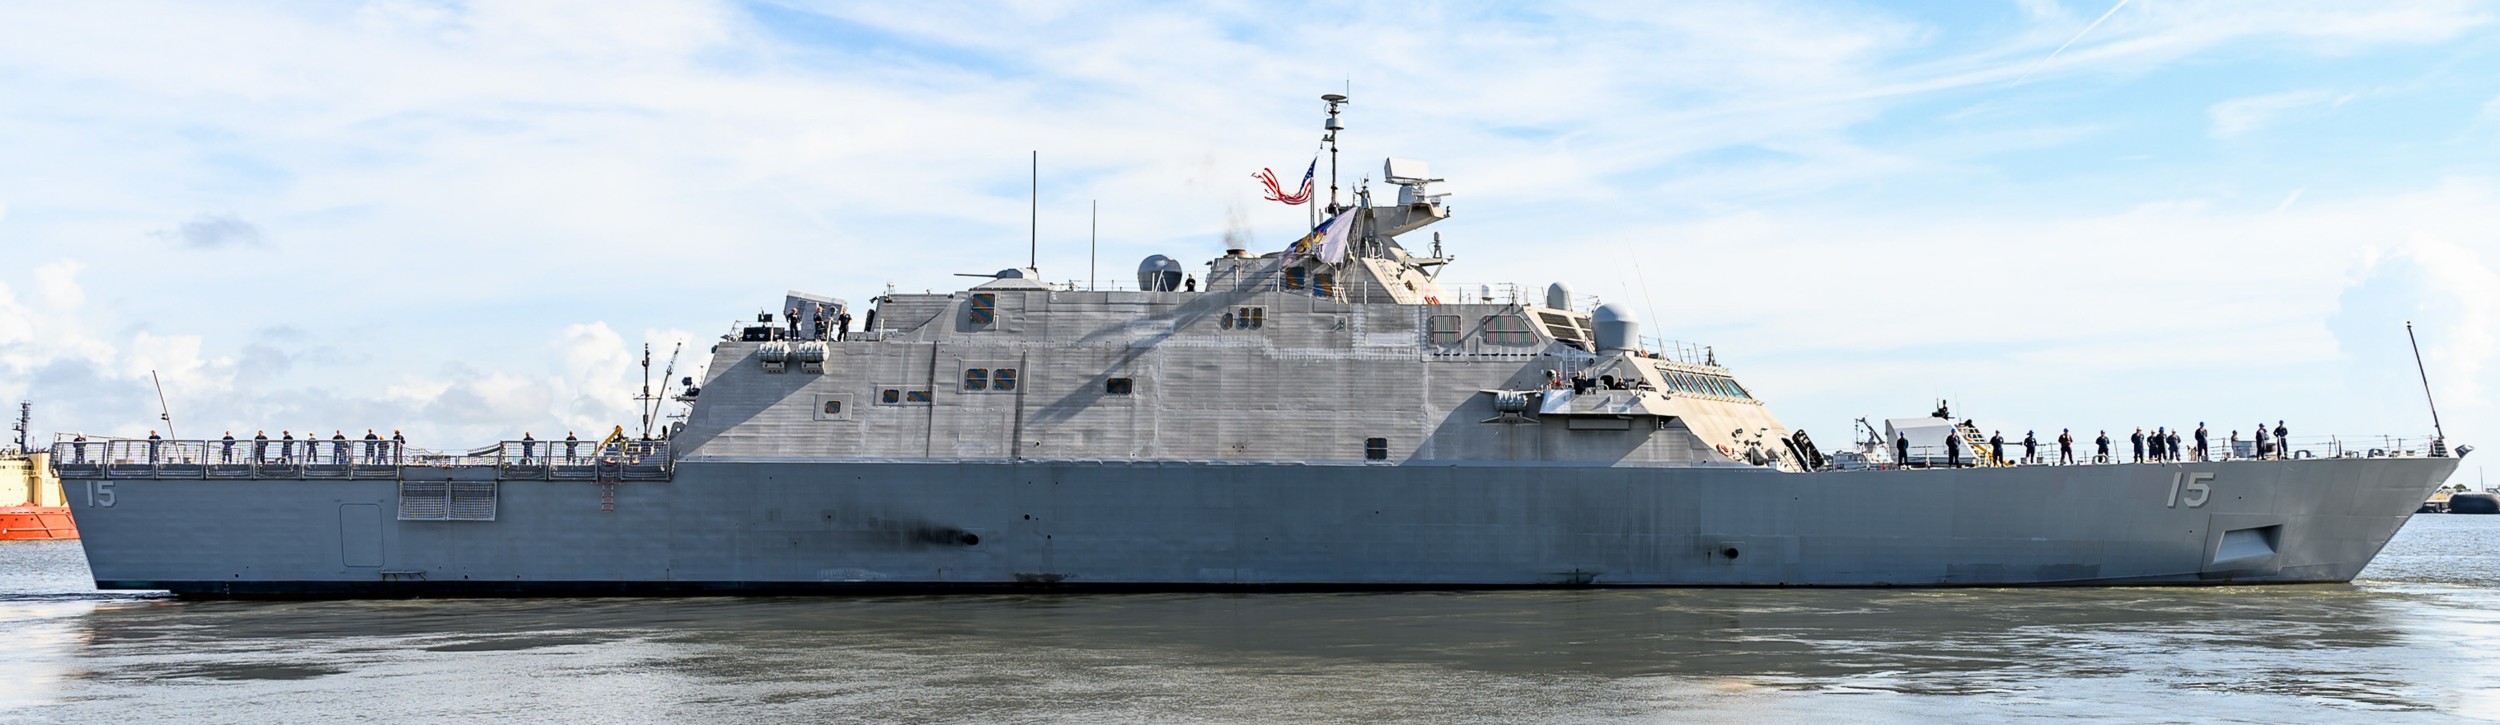 lcs-15 uss billings freedom class littoral combat ship us navy 56 naval station mayport florida